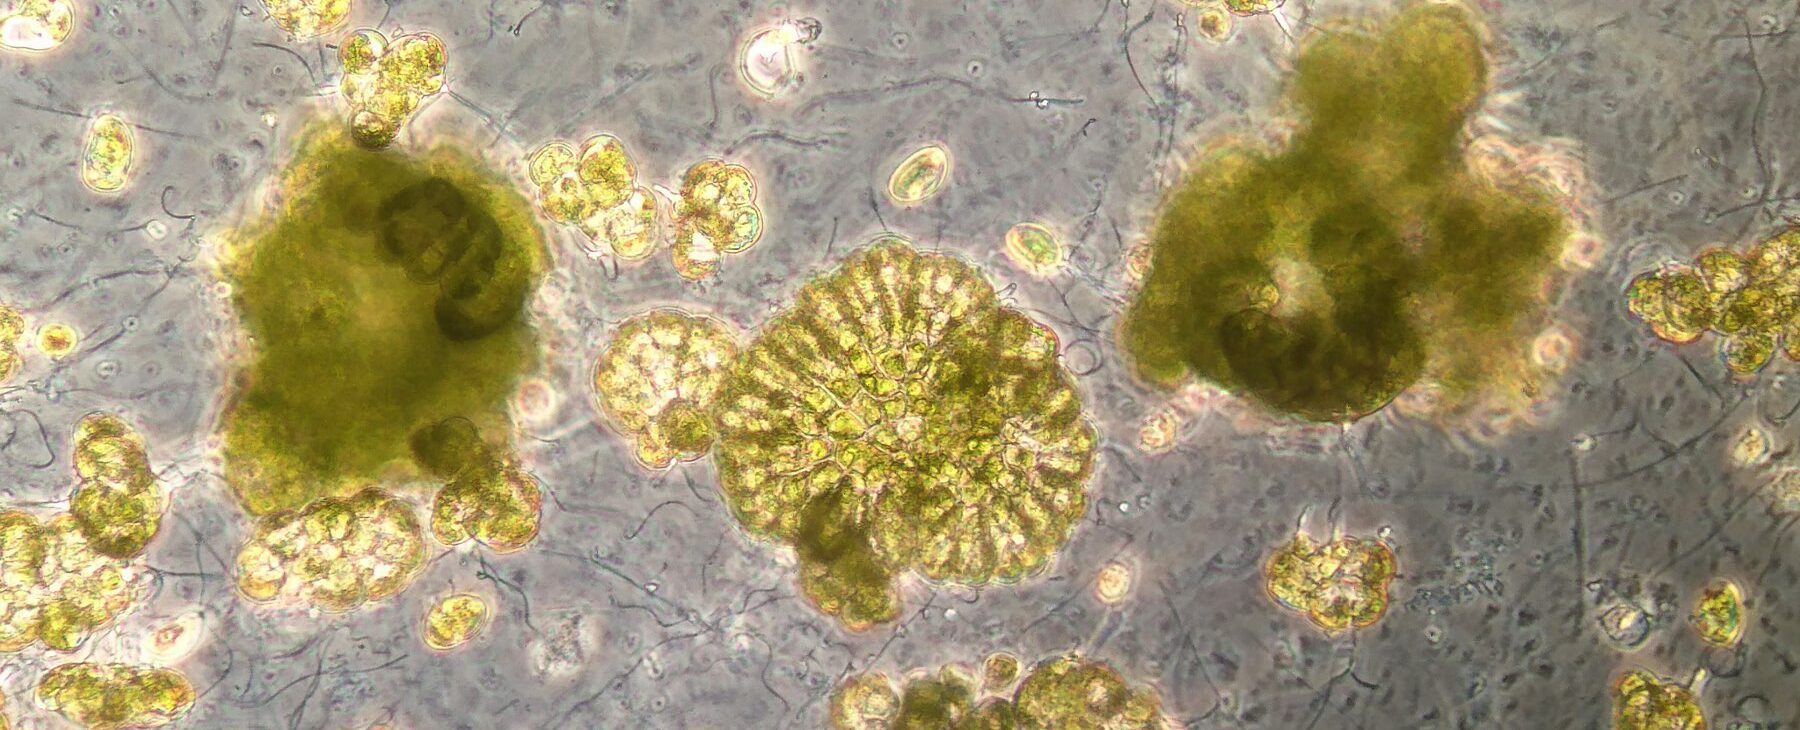 Microscope photo of algae.